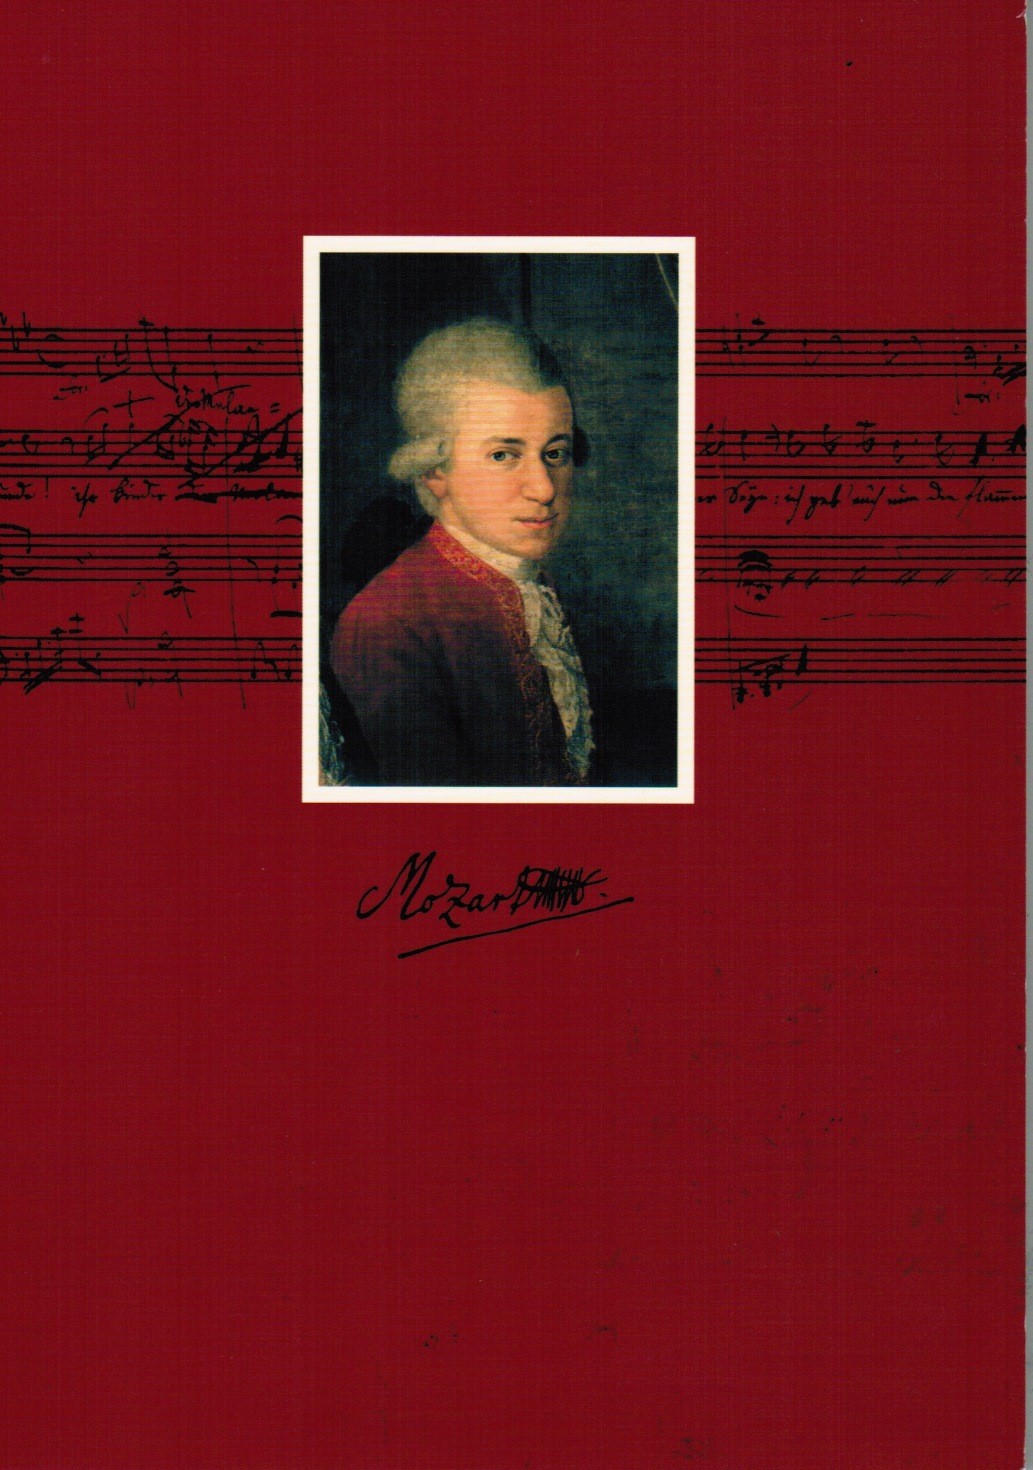 Notepad: Mozart portrait